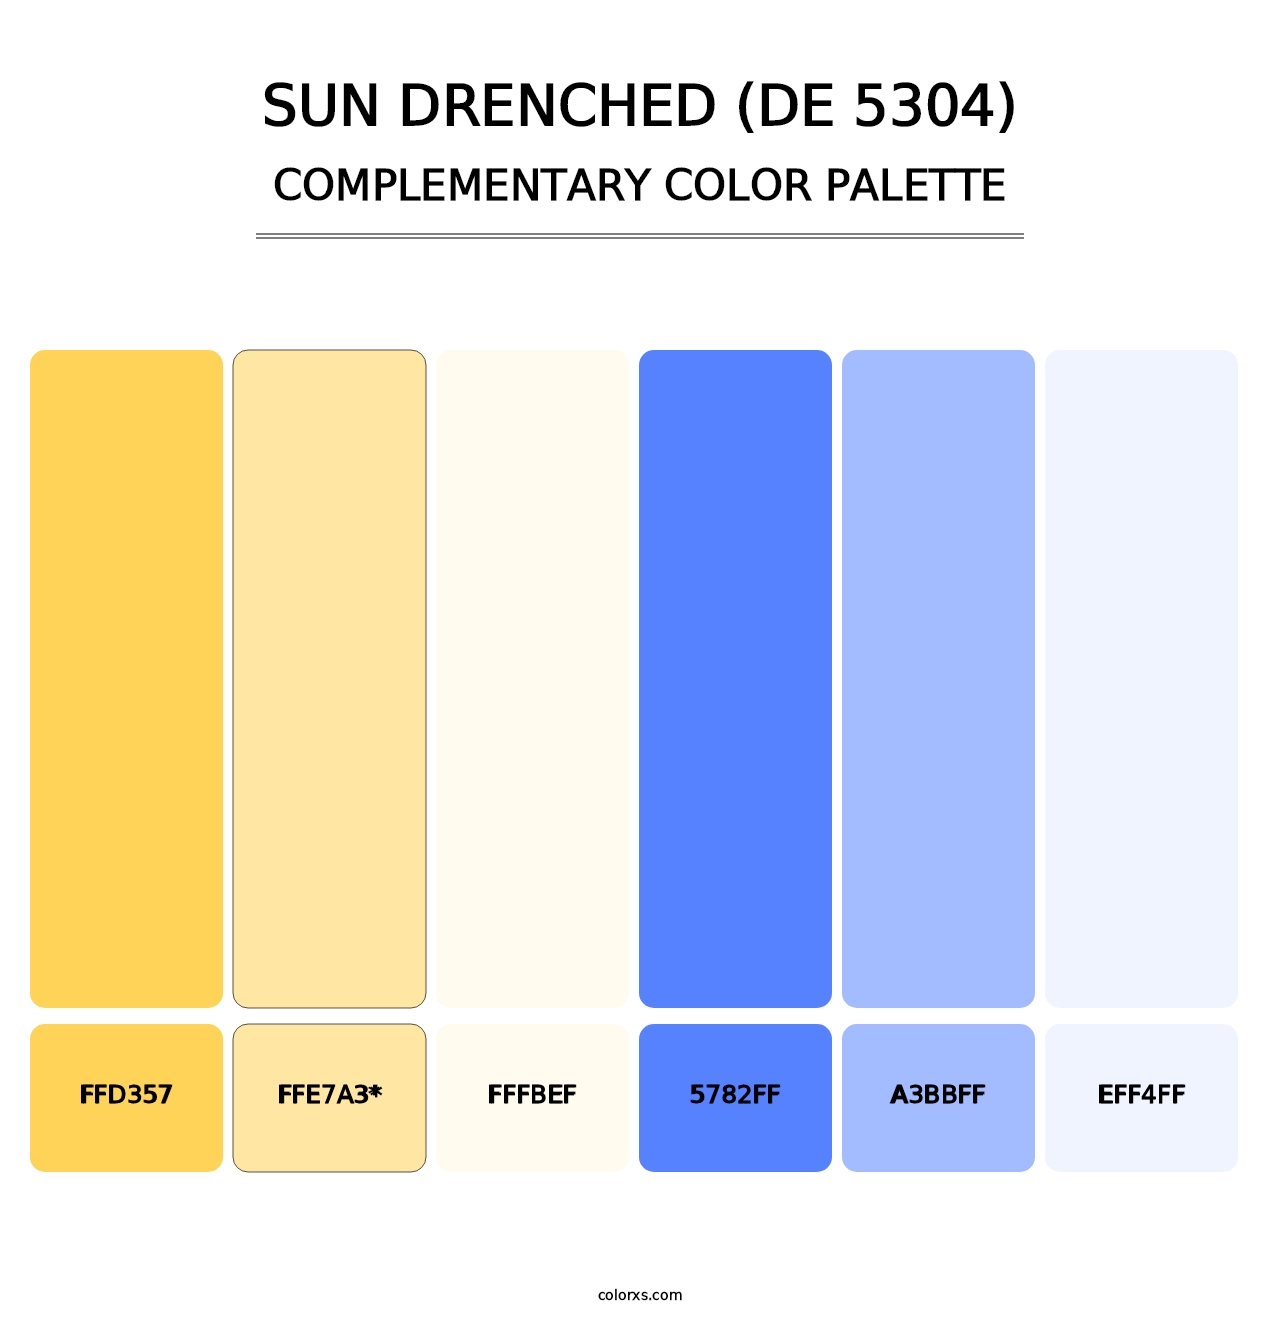 Sun Drenched (DE 5304) - Complementary Color Palette